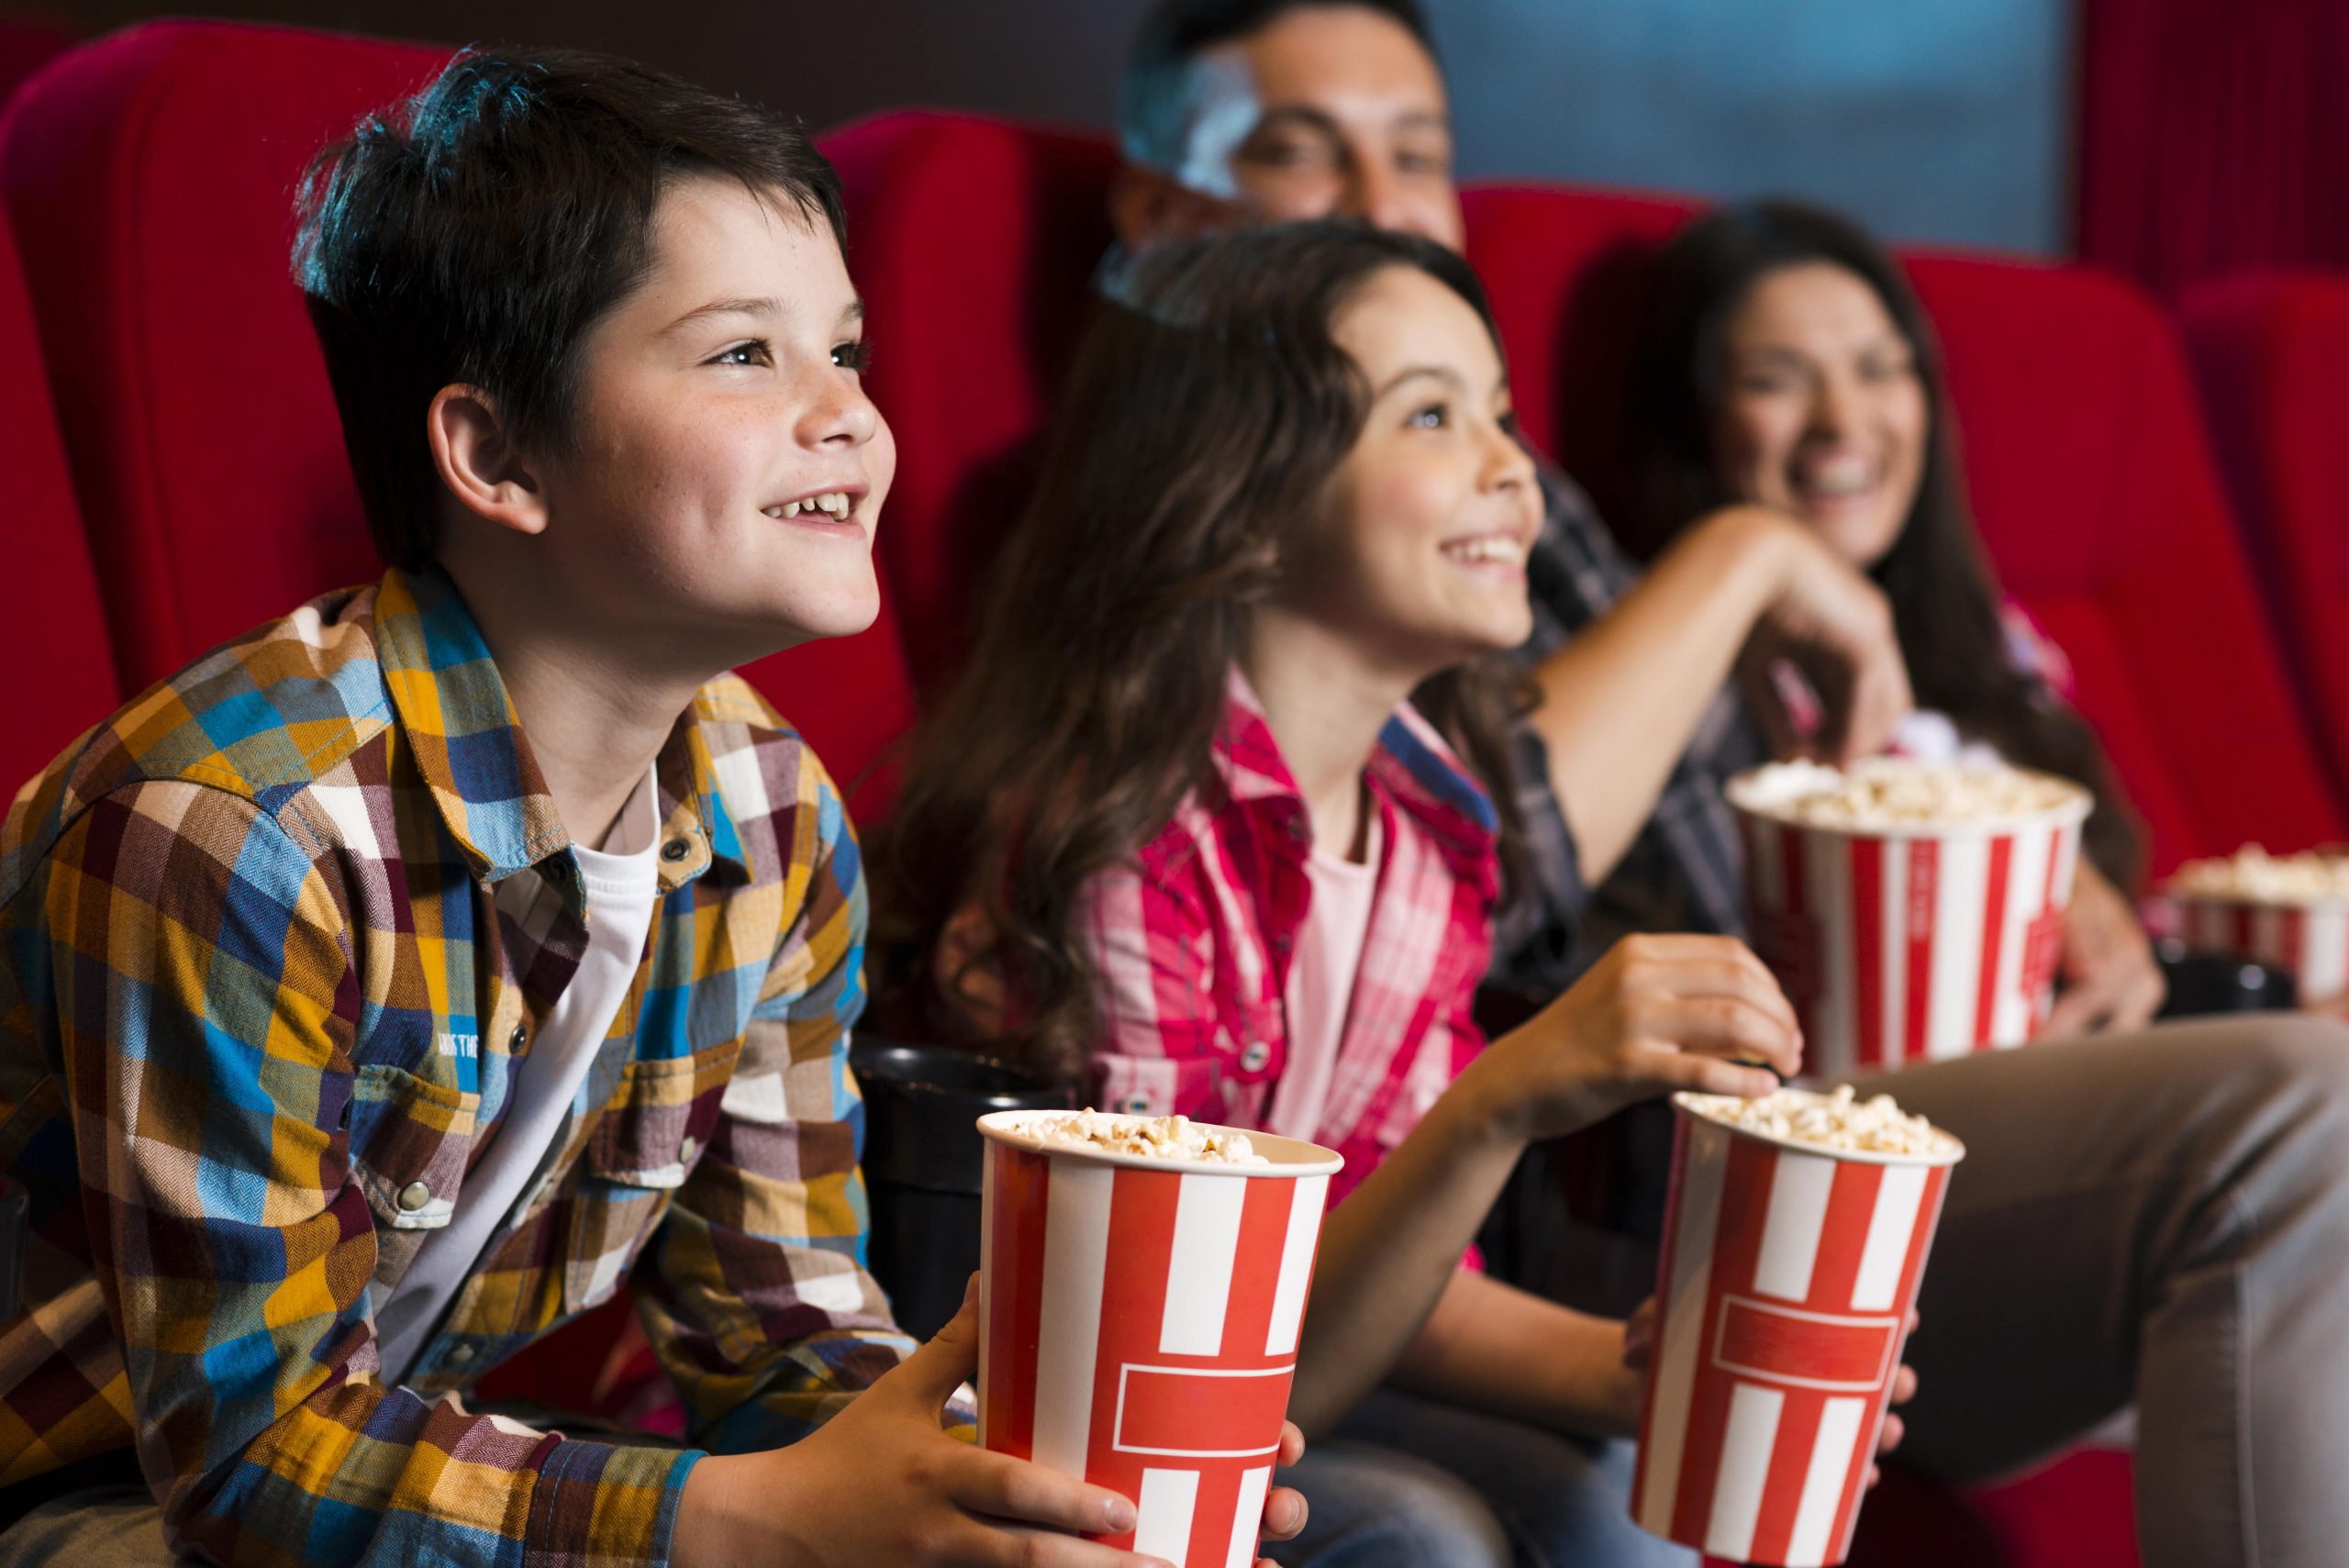 New films in cinema. Дети в кинотеатре. Поход в кинотеатр. Дети в кинотеатре с попкорном. Подростки в кинотеатре с попкорном.